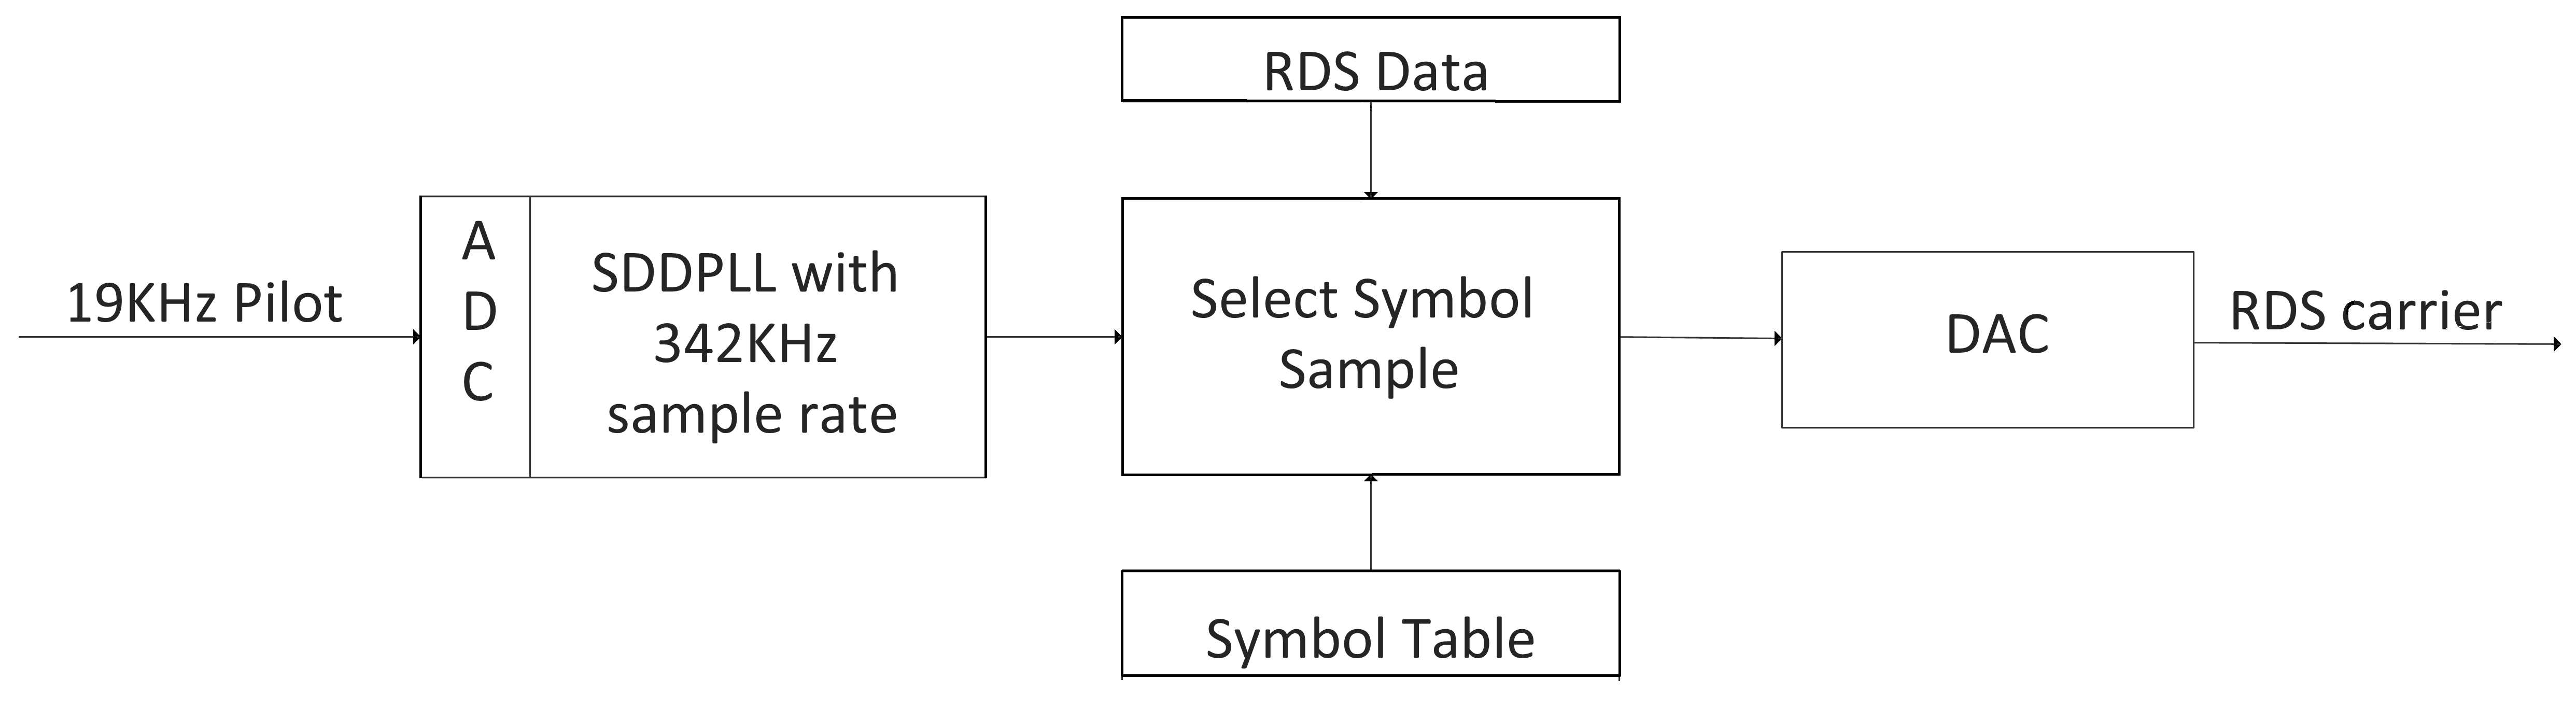 Alternative RDS diagram